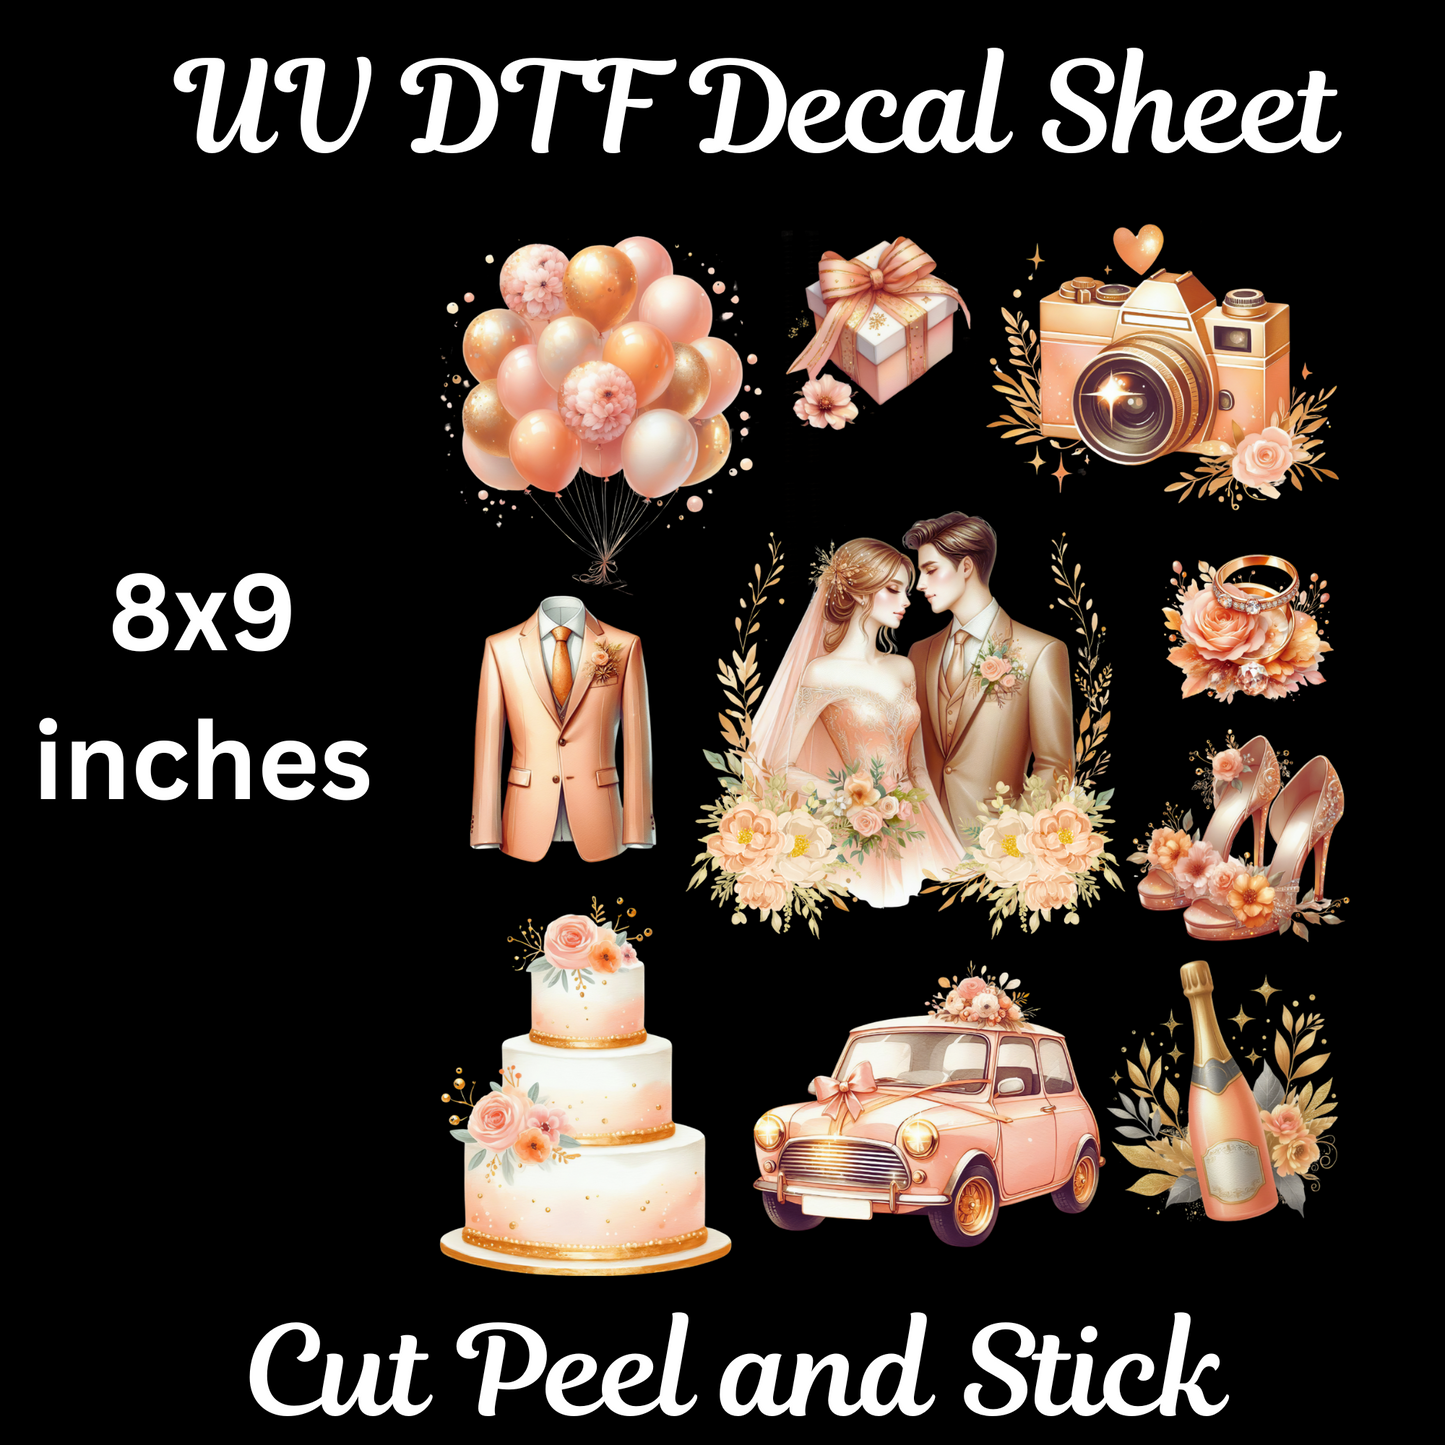 Peach Bride UV DTF Decal Sheet 8x9 inches